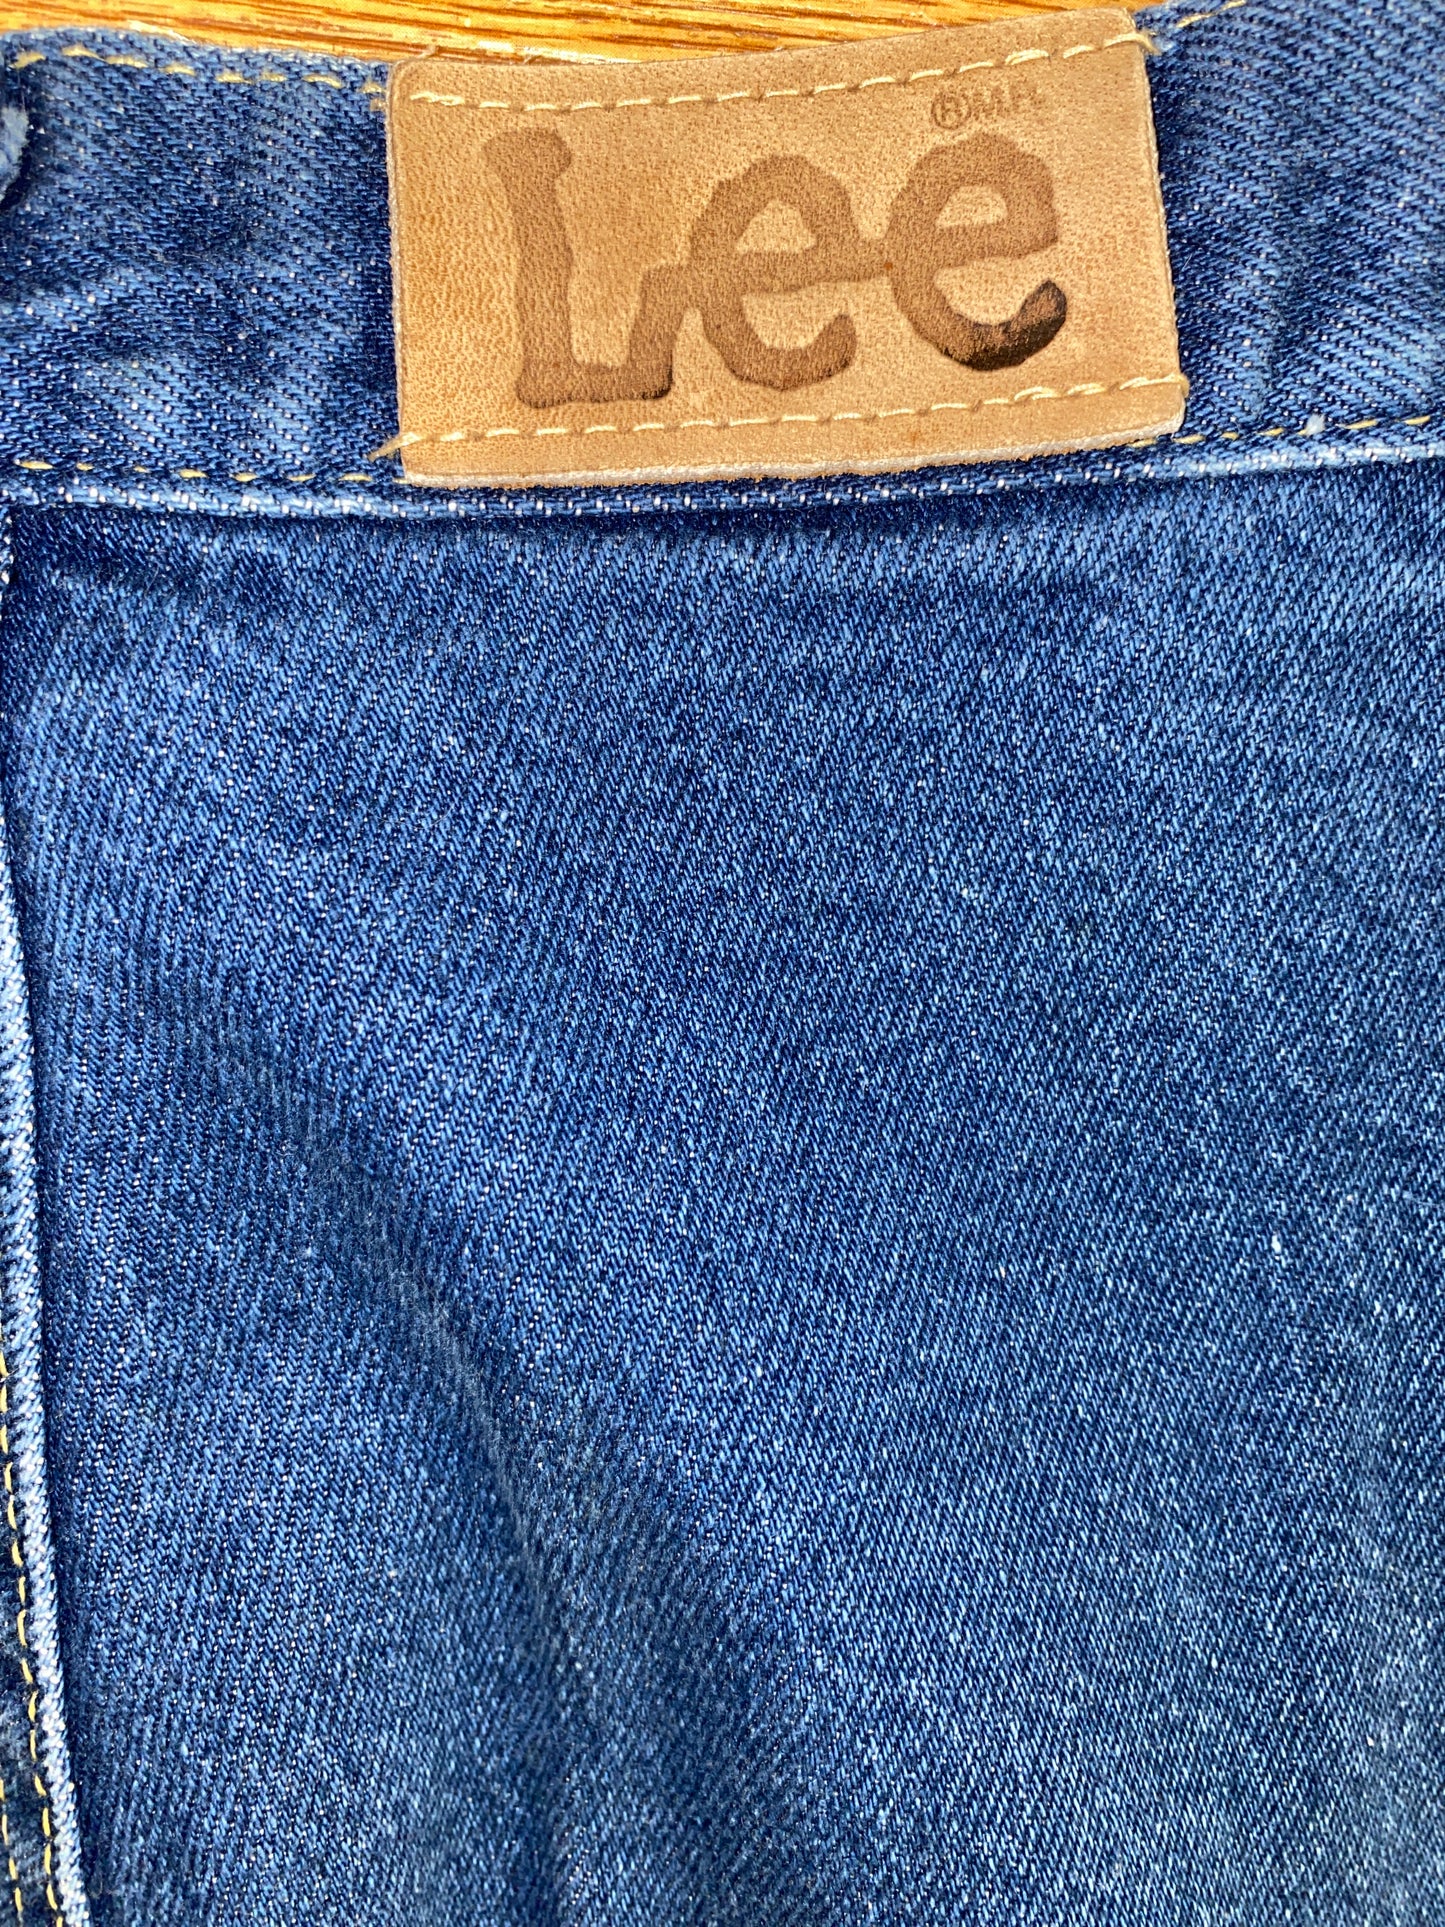 1980s High Waist Pleated Lee Jeans